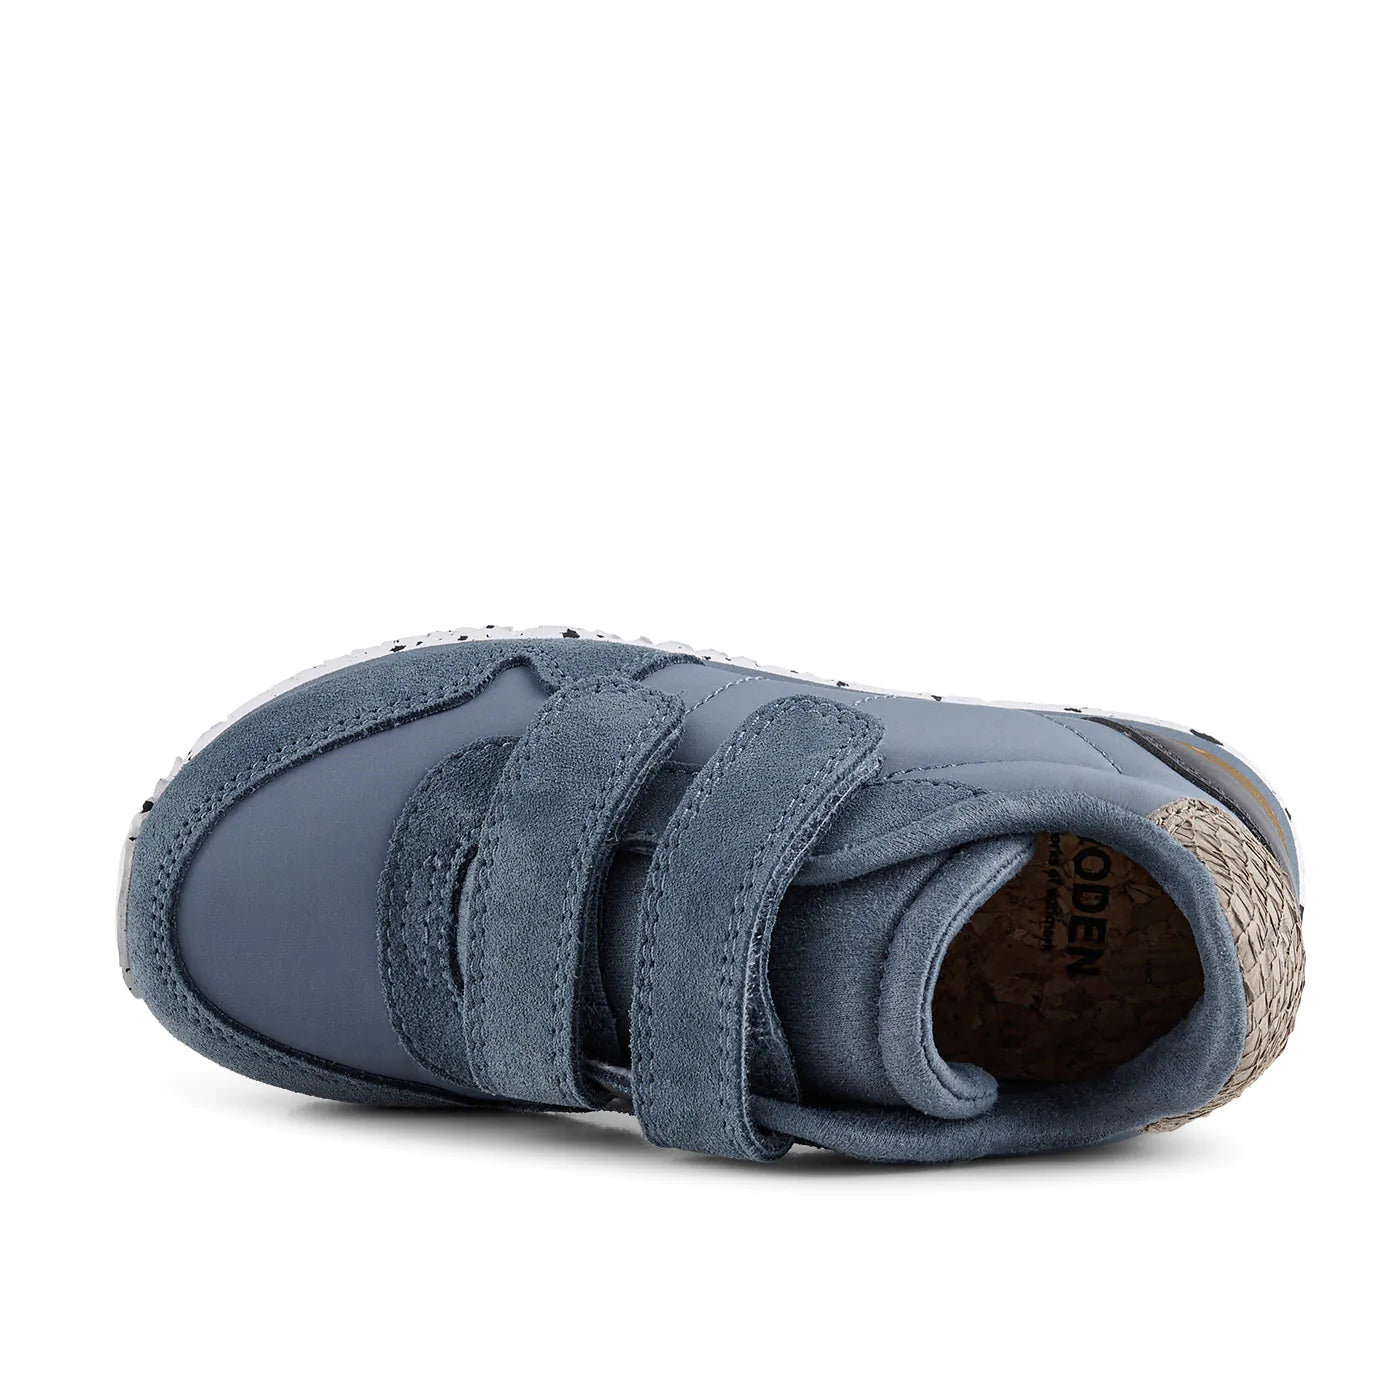 Nor Suede - Vintage Blue - Sneakers